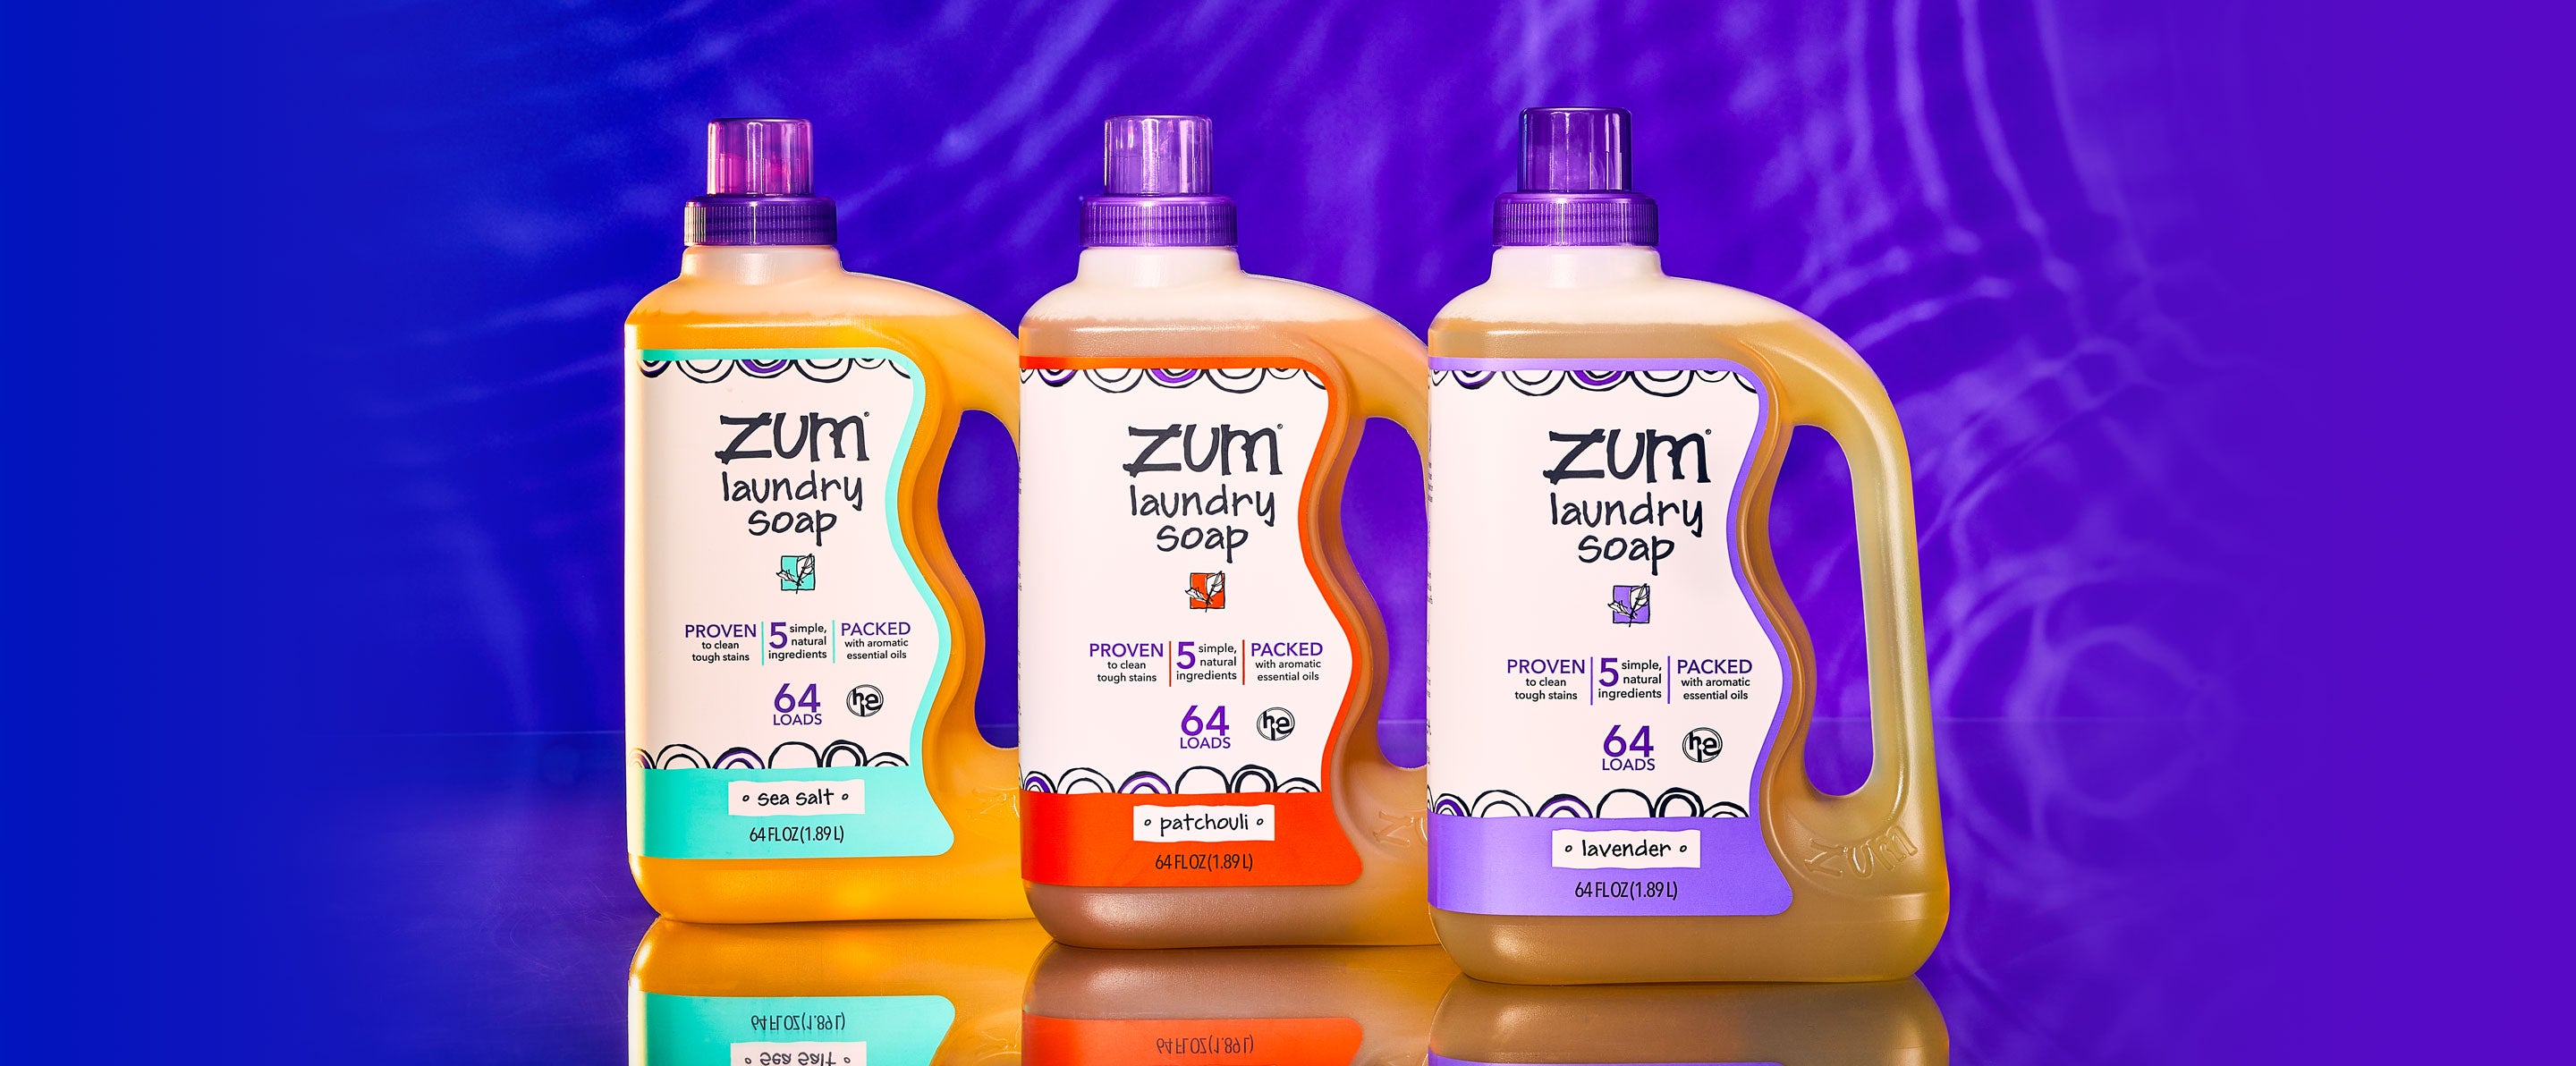 Zum Laundry Soap lined up showing three scents - sea salt, frankincense & myrrh and lavender.